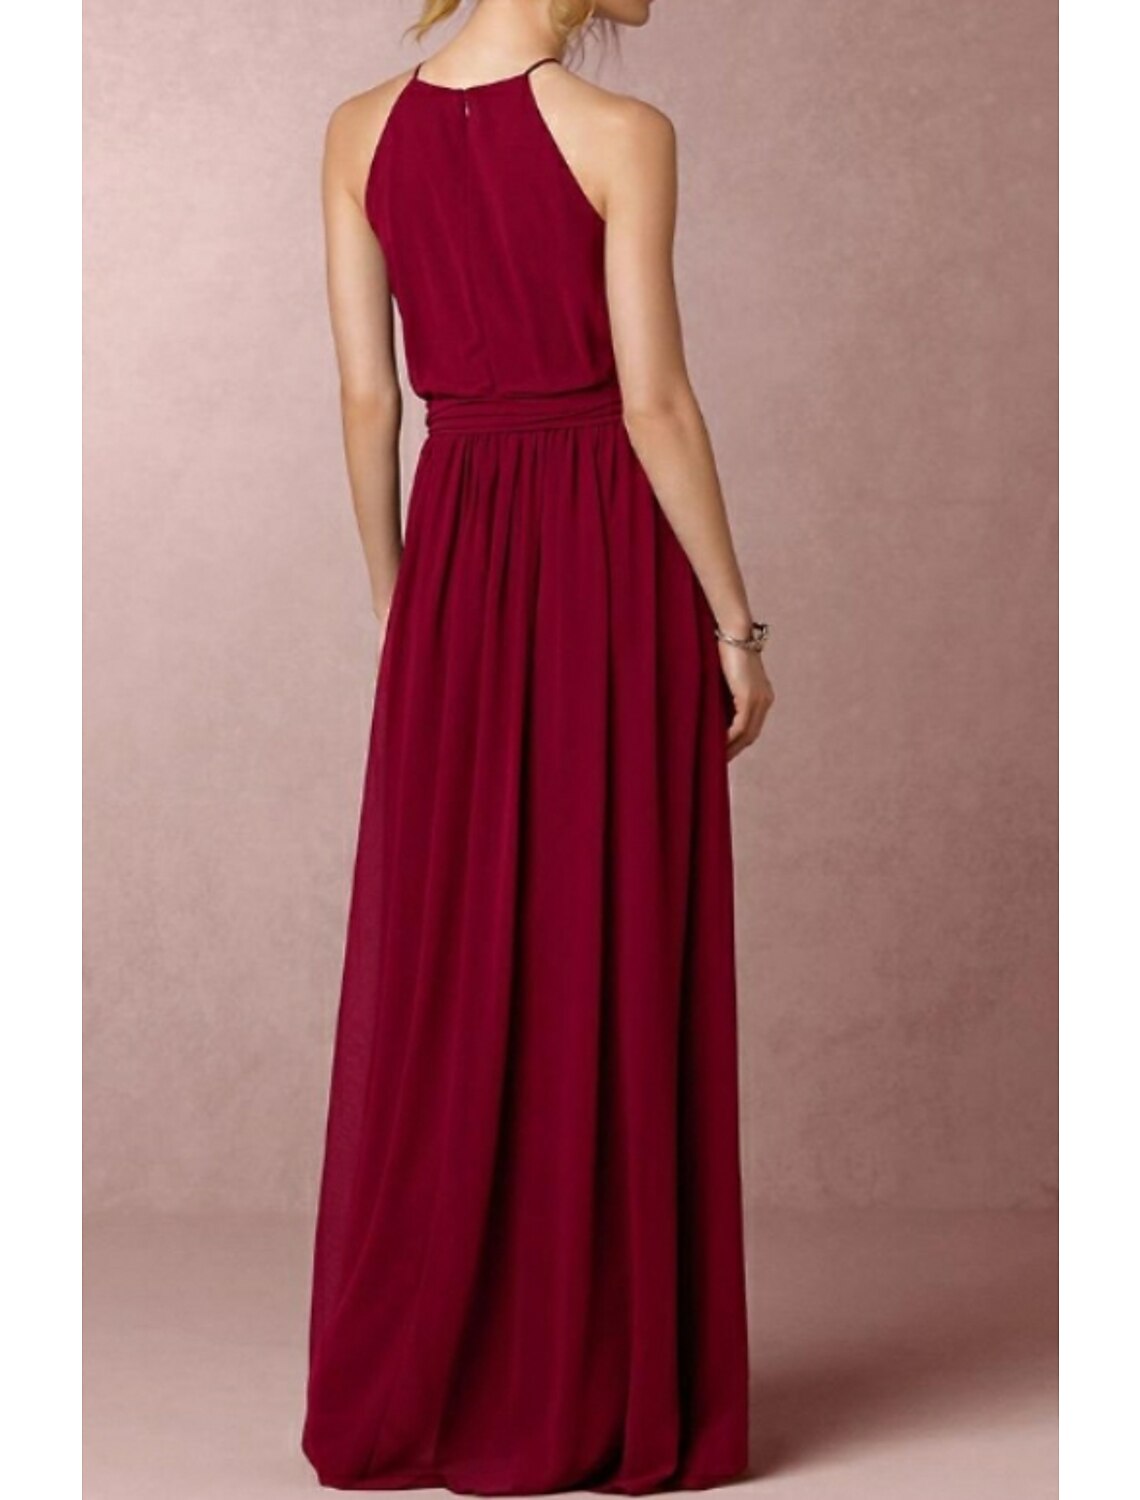 A-Line Bridesmaid Dress Halter Neck Sleeveless Elegant Floor Length Chiffon with Bow(s)